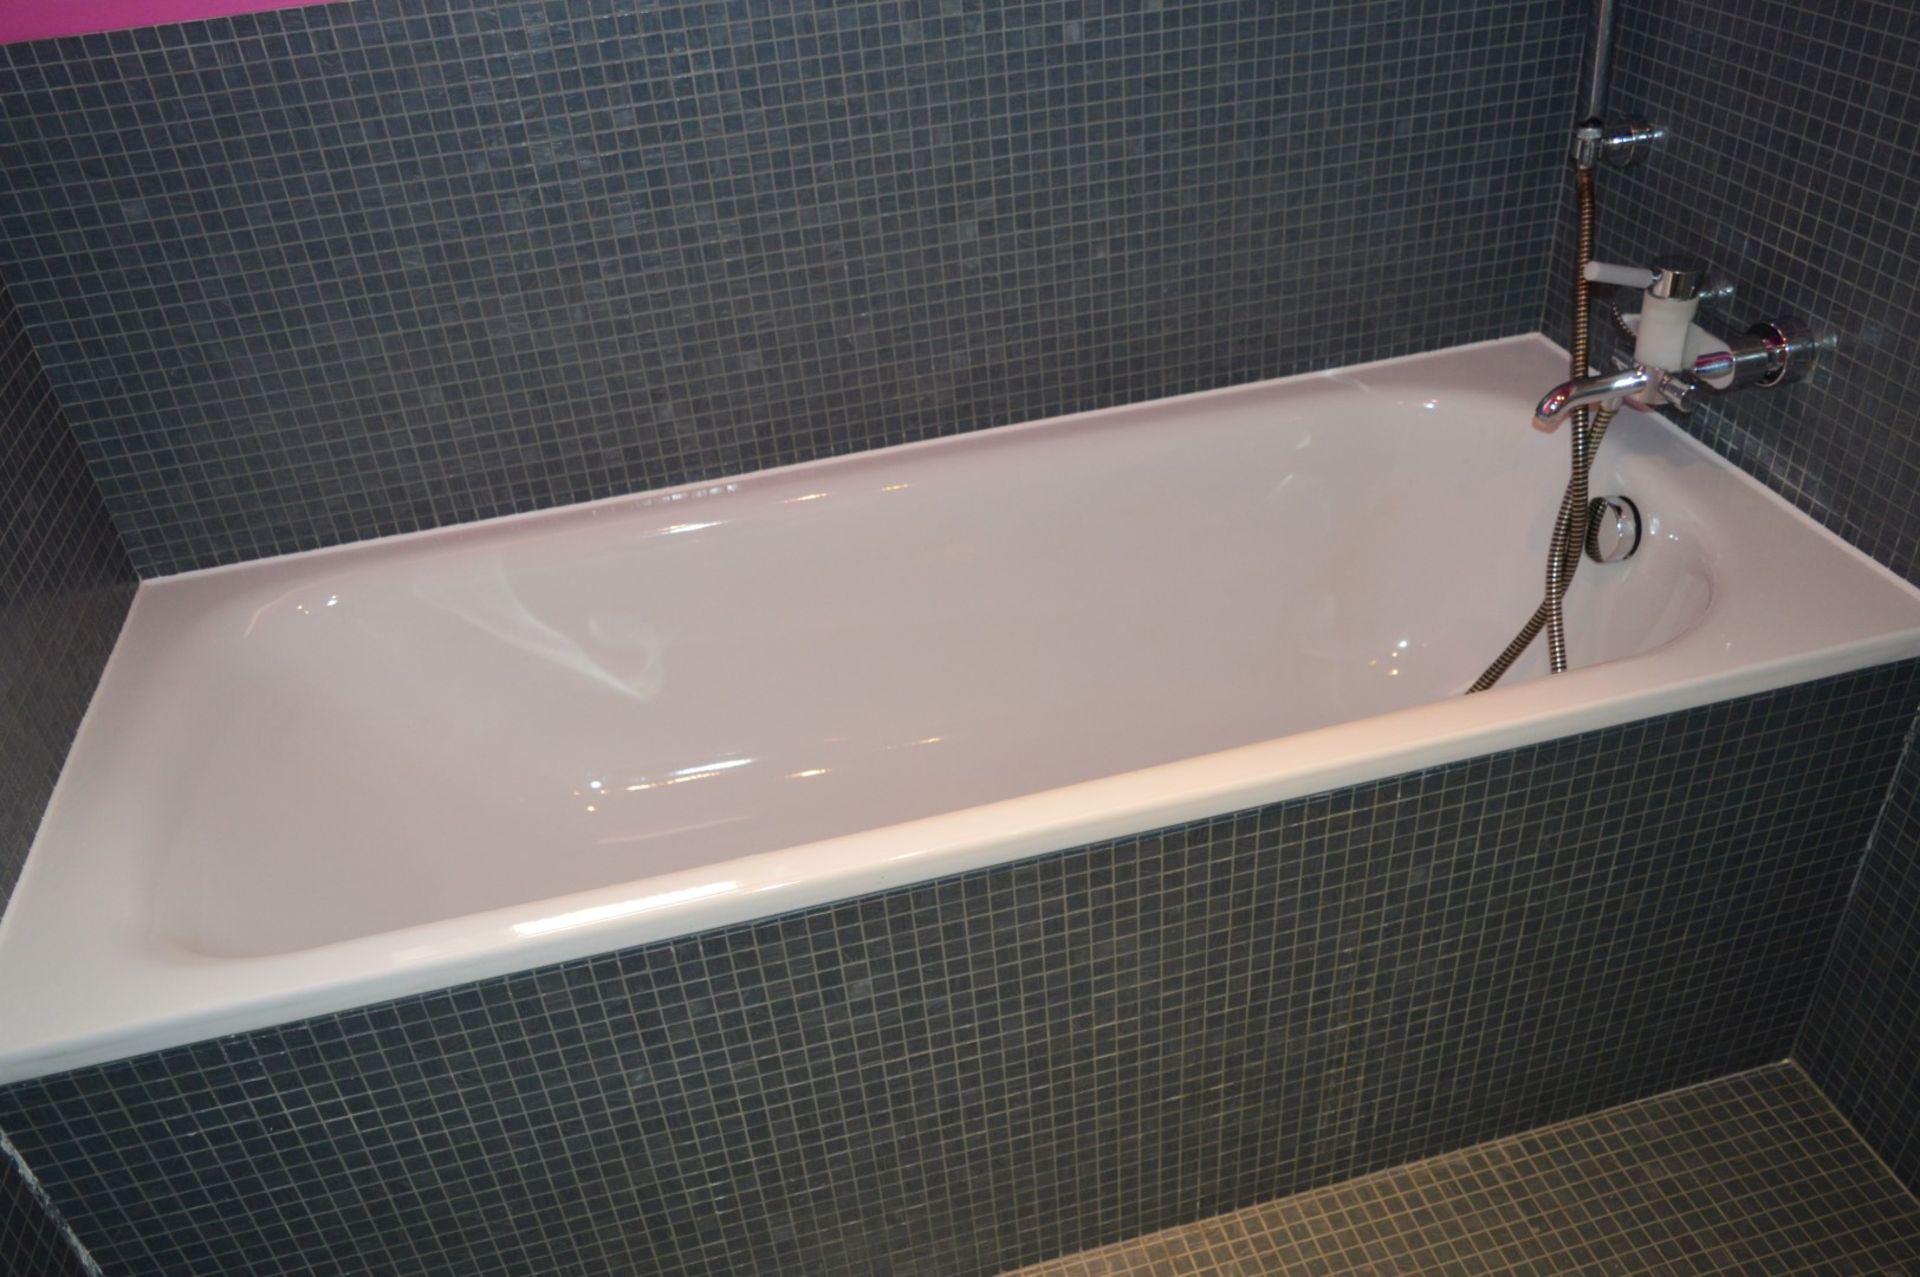 1 x Bathroom Suite Including Vanity Unit With Inset Basin, Dorn Bracht Mixer Tap, Duravit Wall